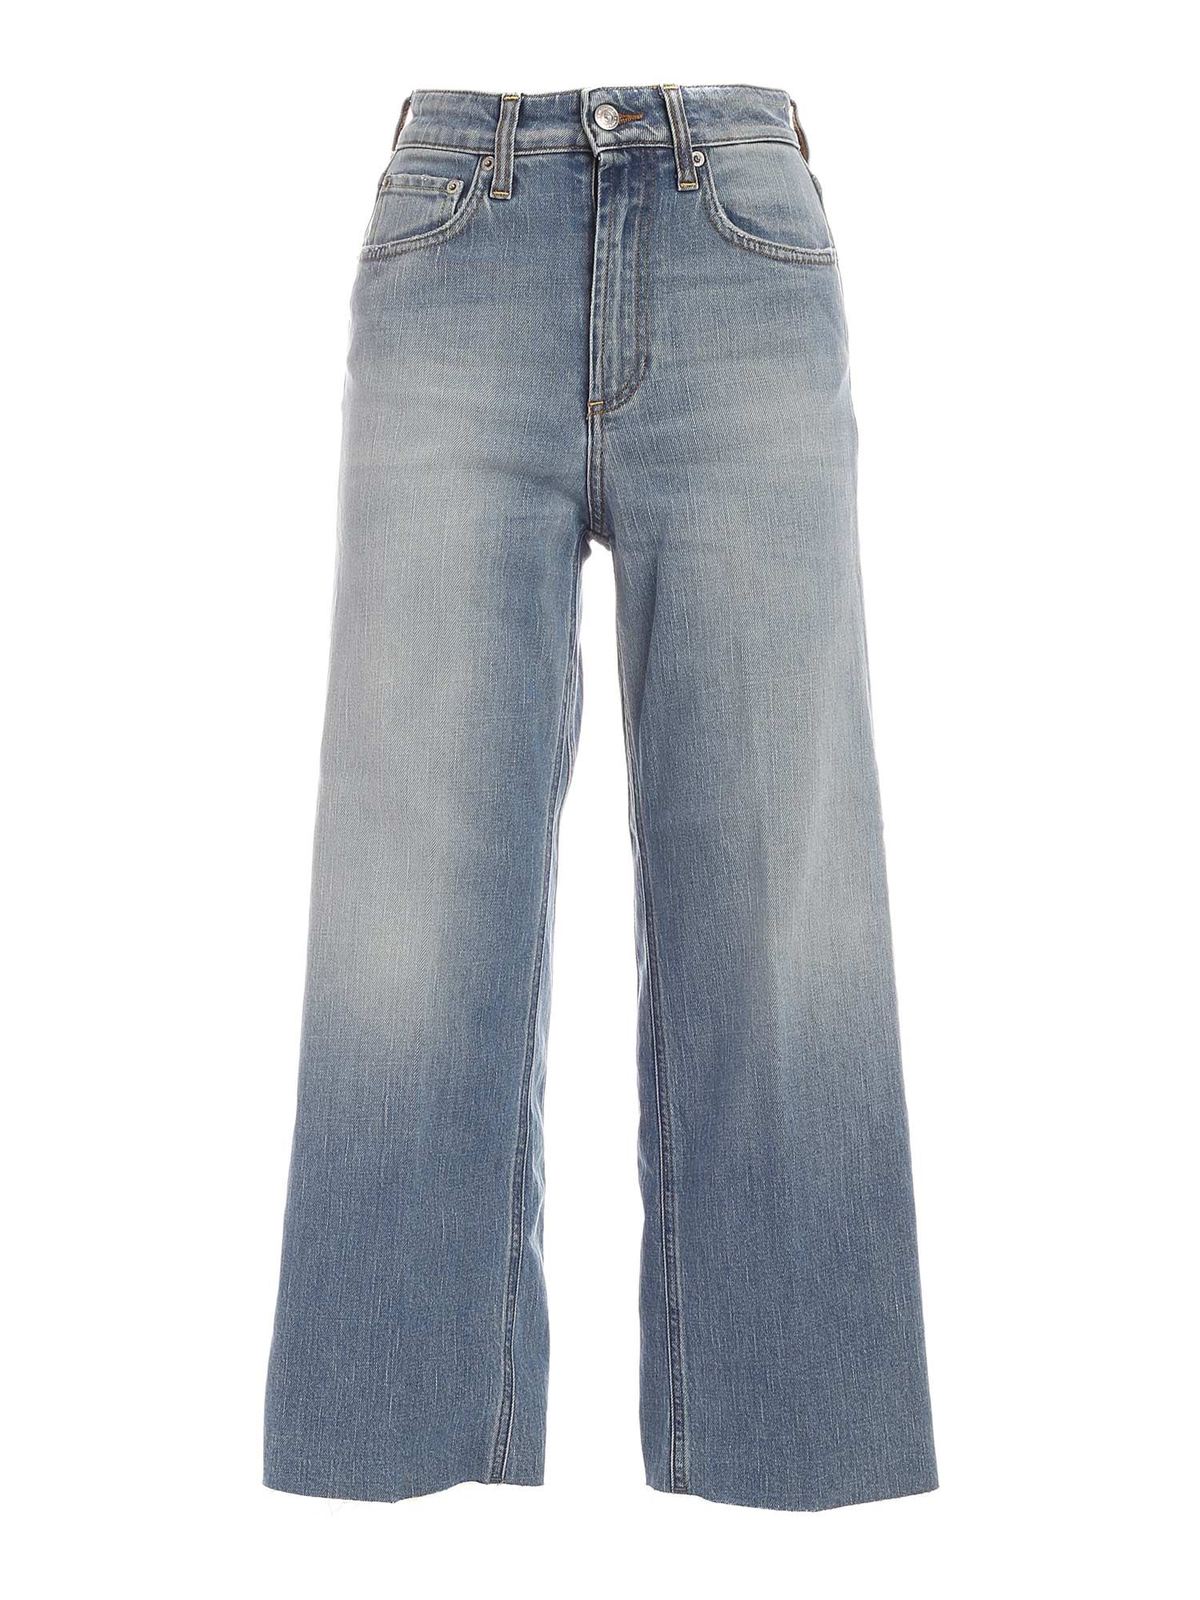 Flared jeans Department 5 - Spear wide leg jeans in blue - D21D72D2101100